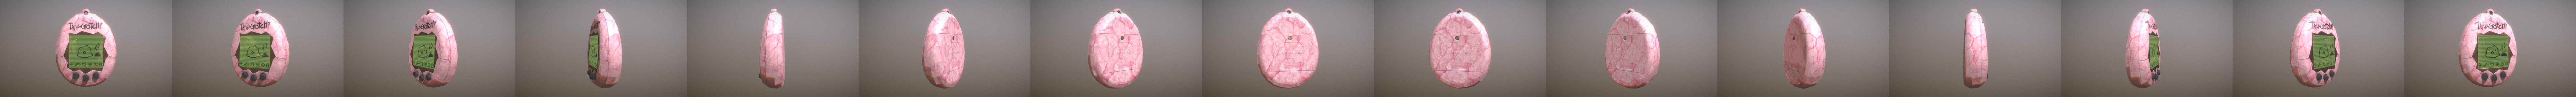 3D Model: Pink Tamagotchi ~ Buy Now #91501059